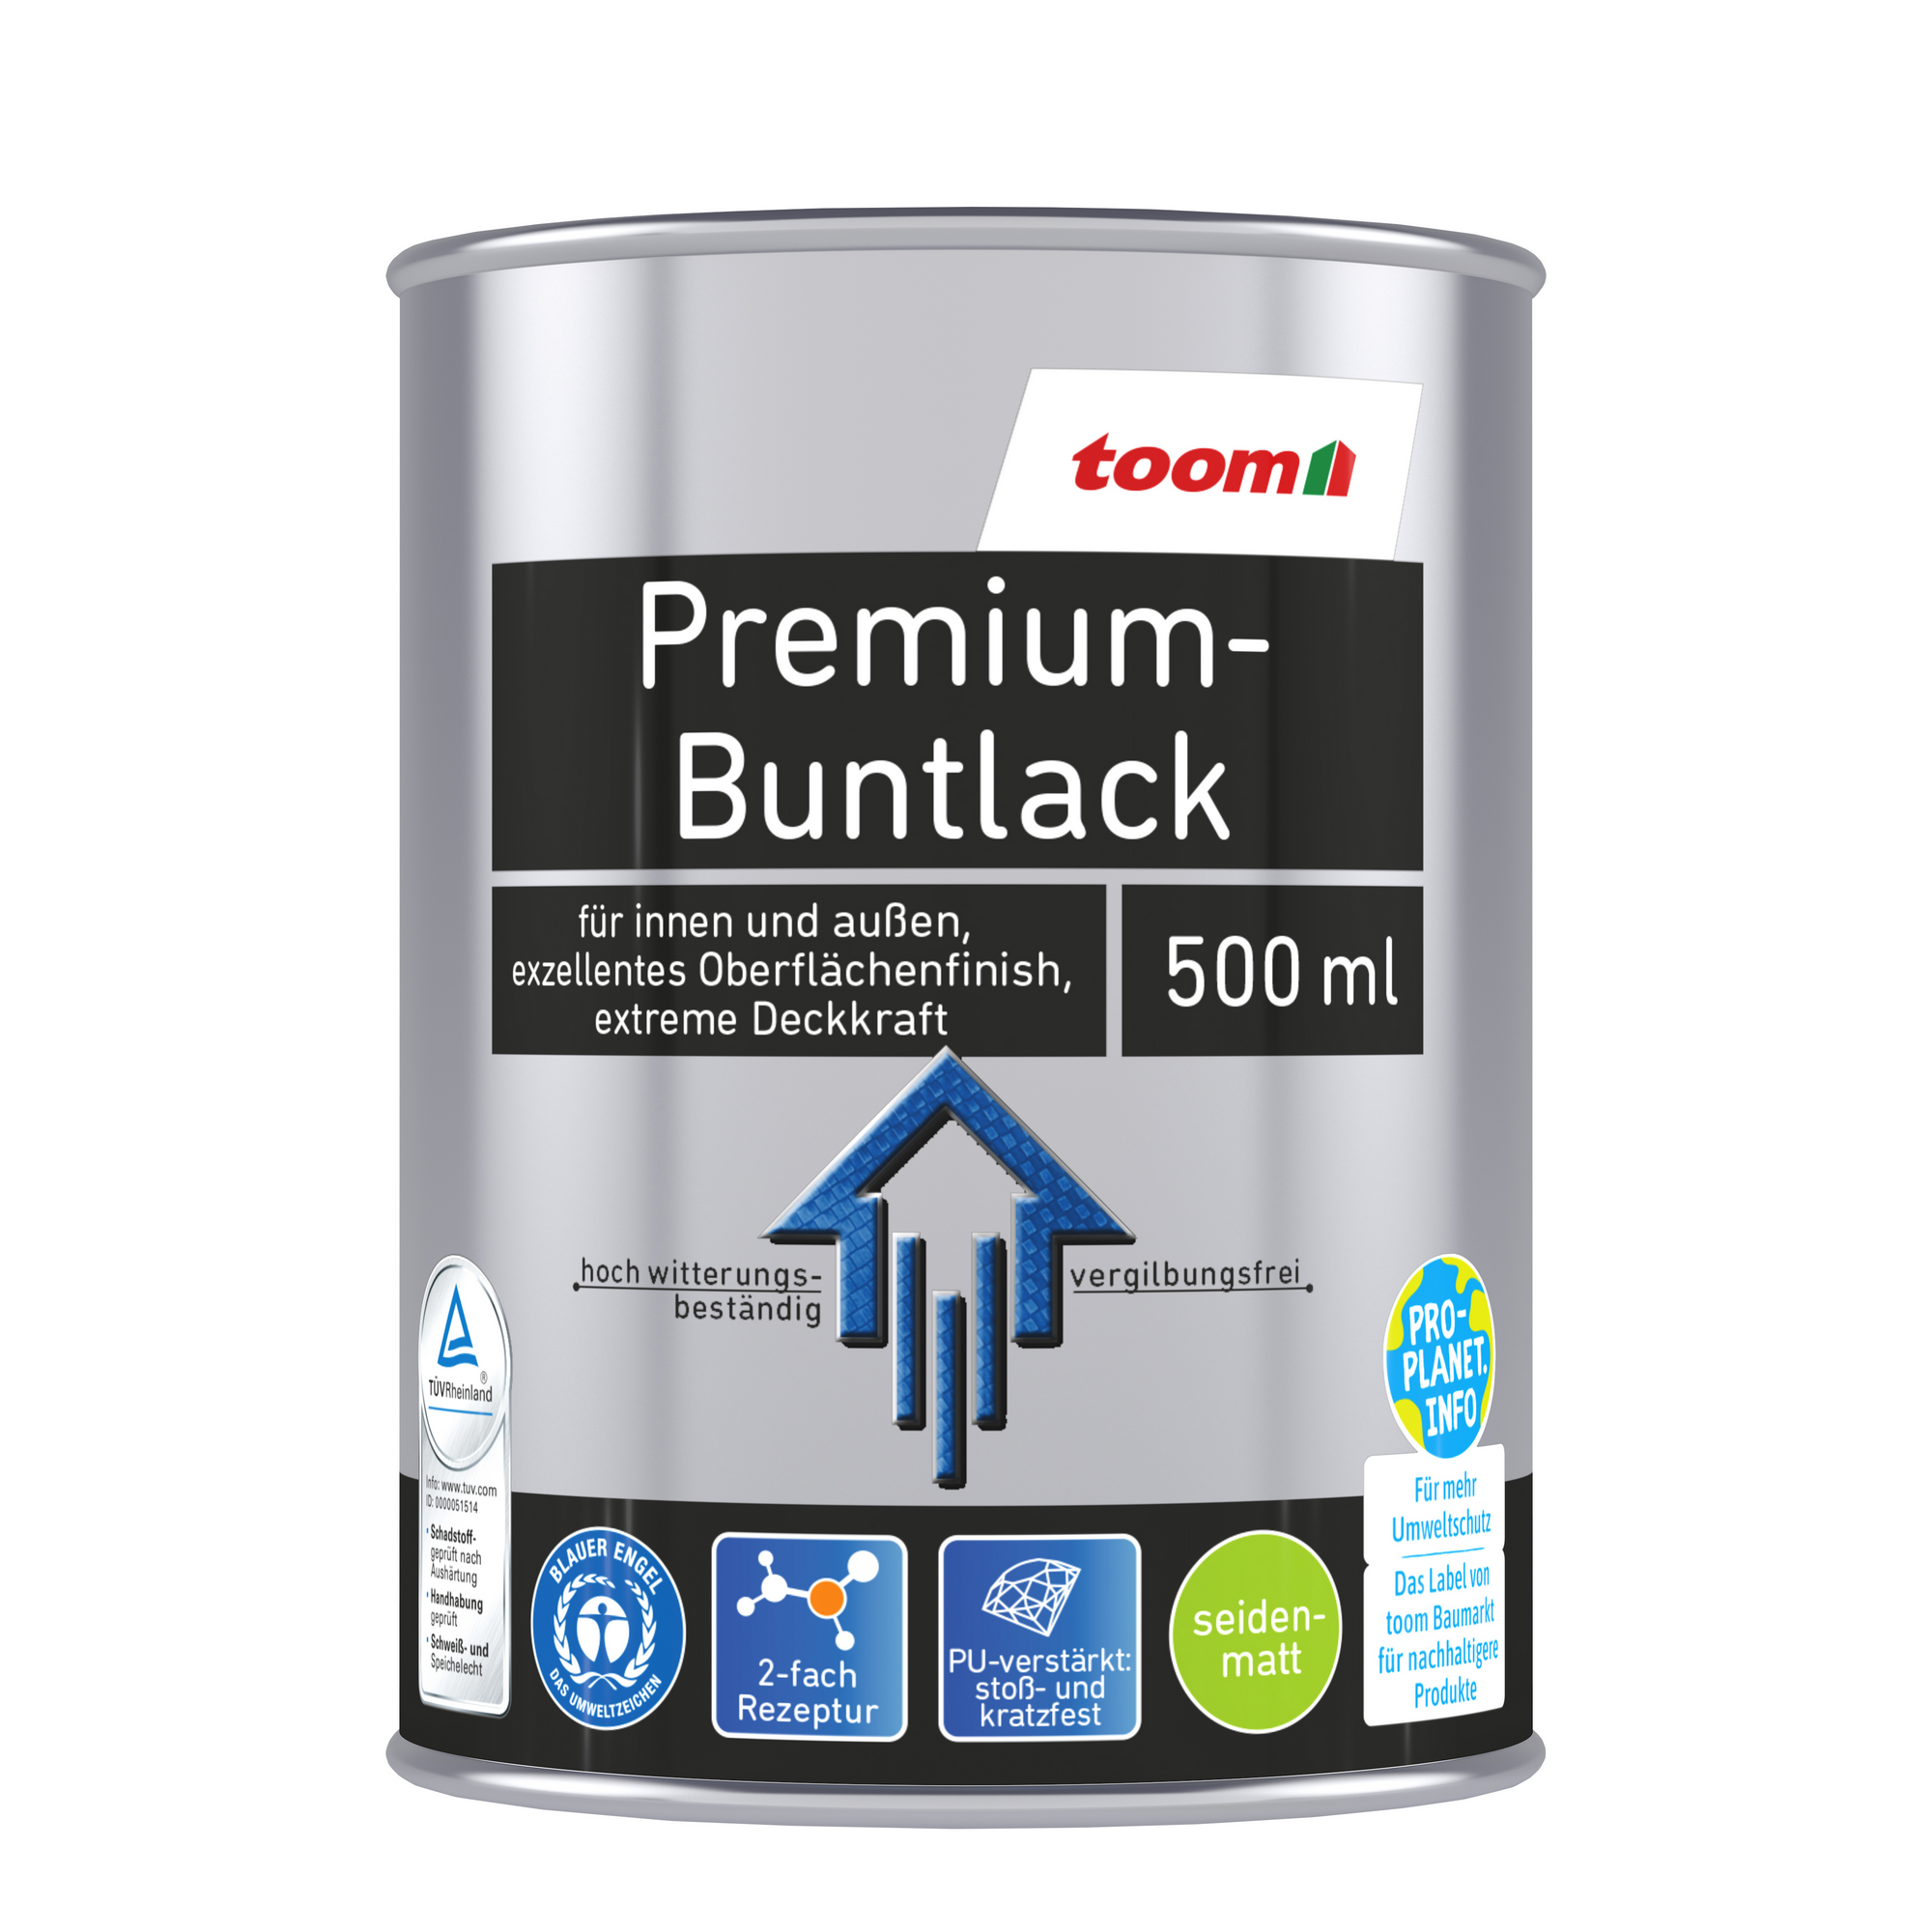 toom Premium-Buntlack nussbraun seidenmatt 500 ml